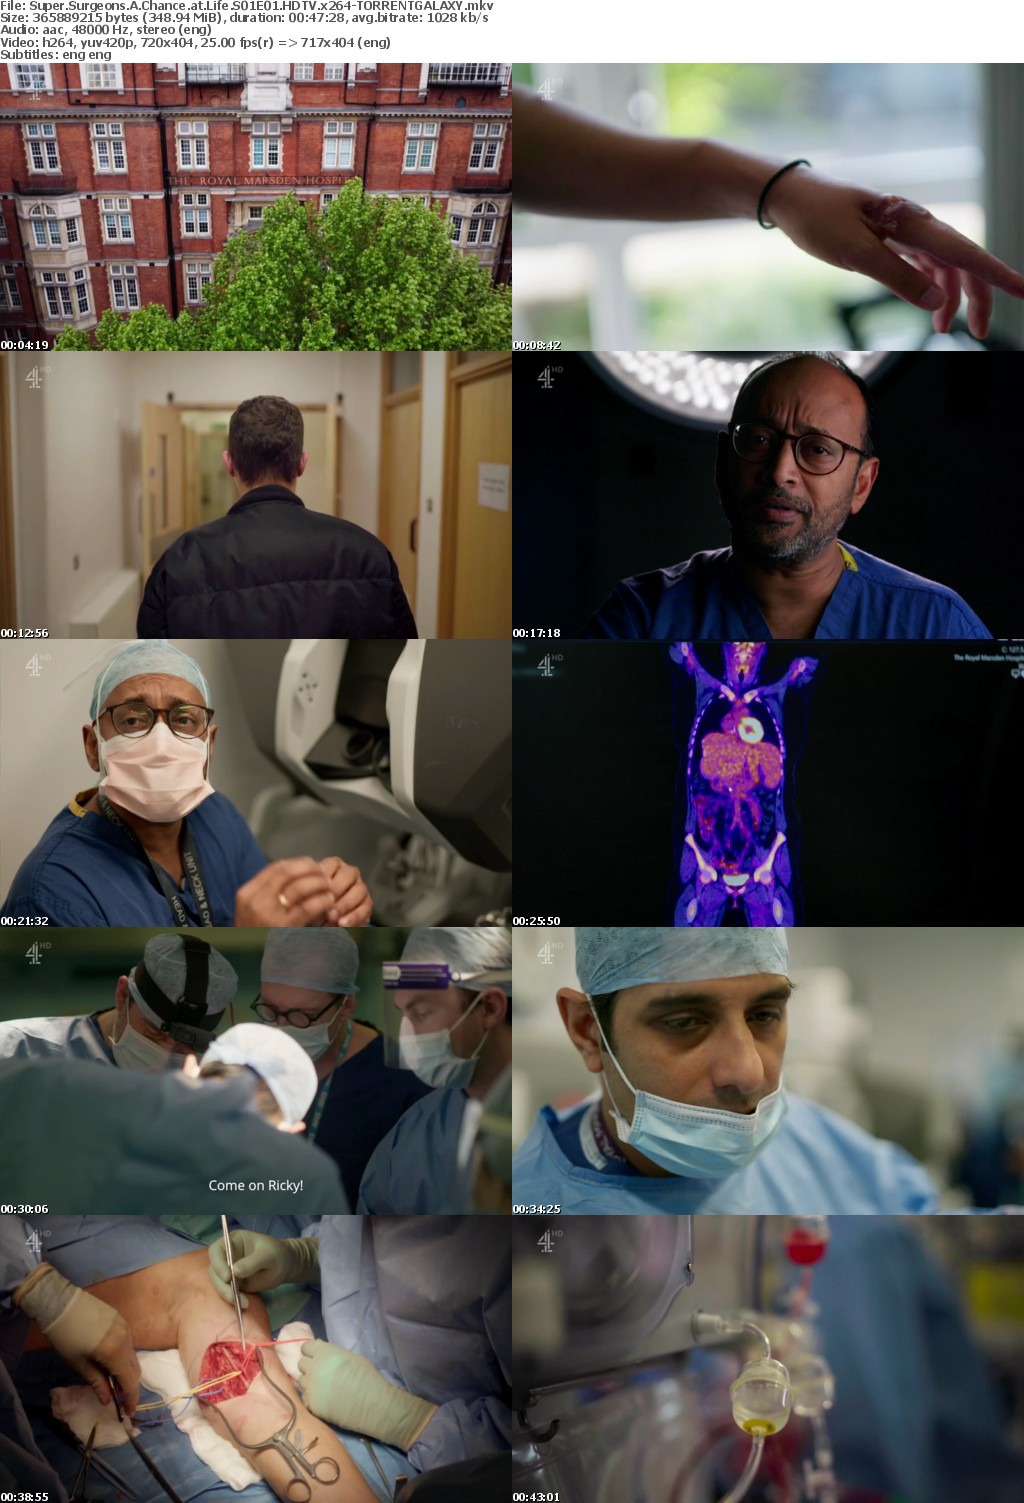 Super Surgeons A Chance at Life S01E01 HDTV x264-GALAXY